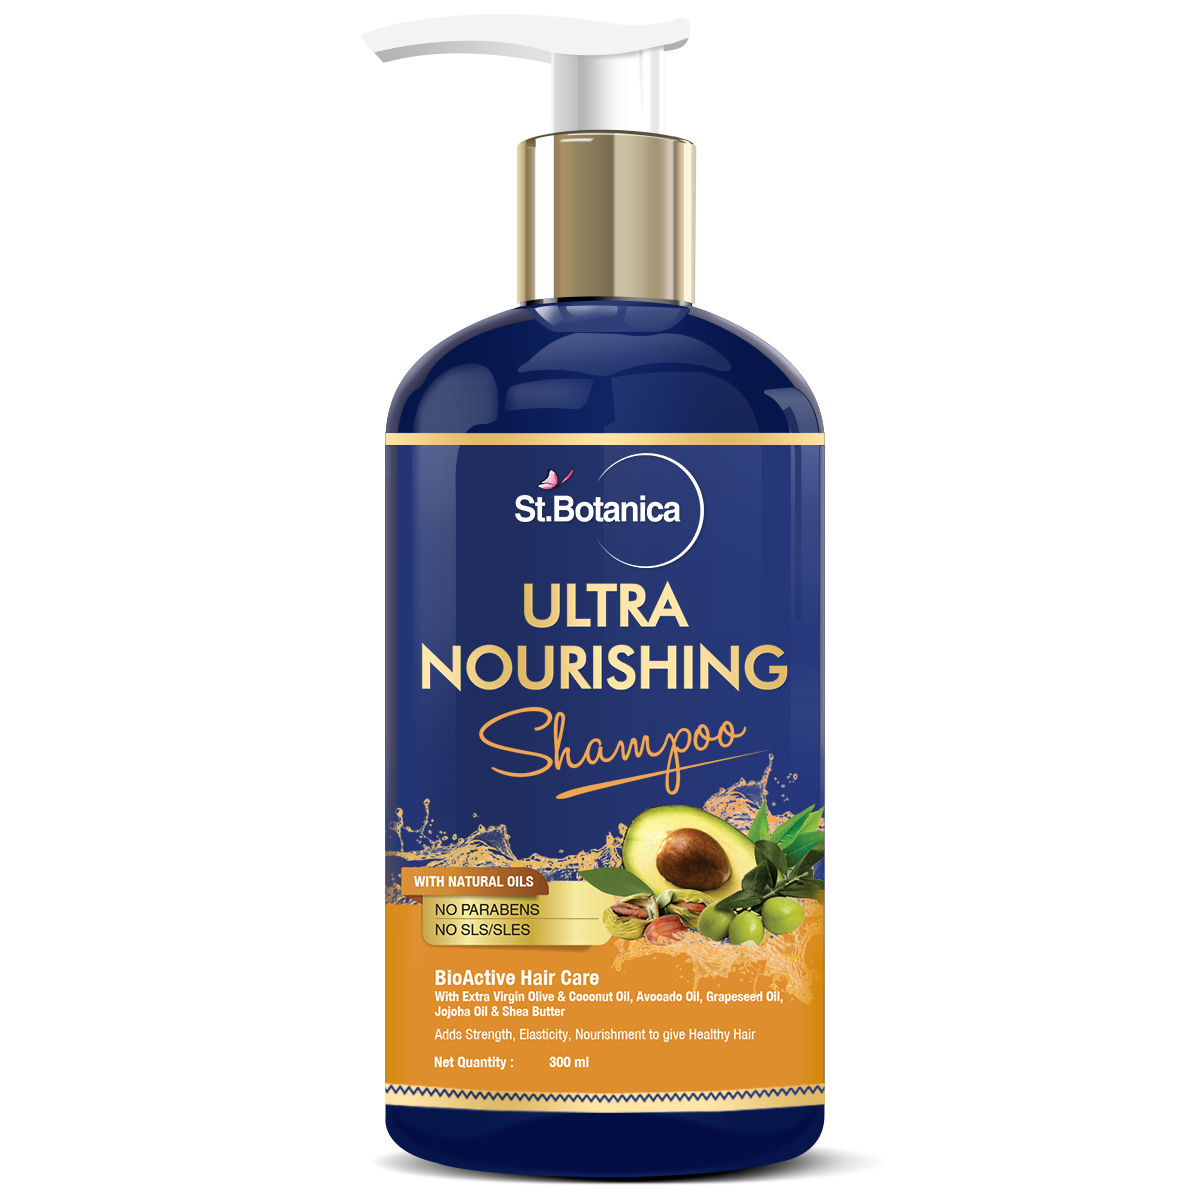 St.Botanica Ultra Nourishing Hair Shampoo